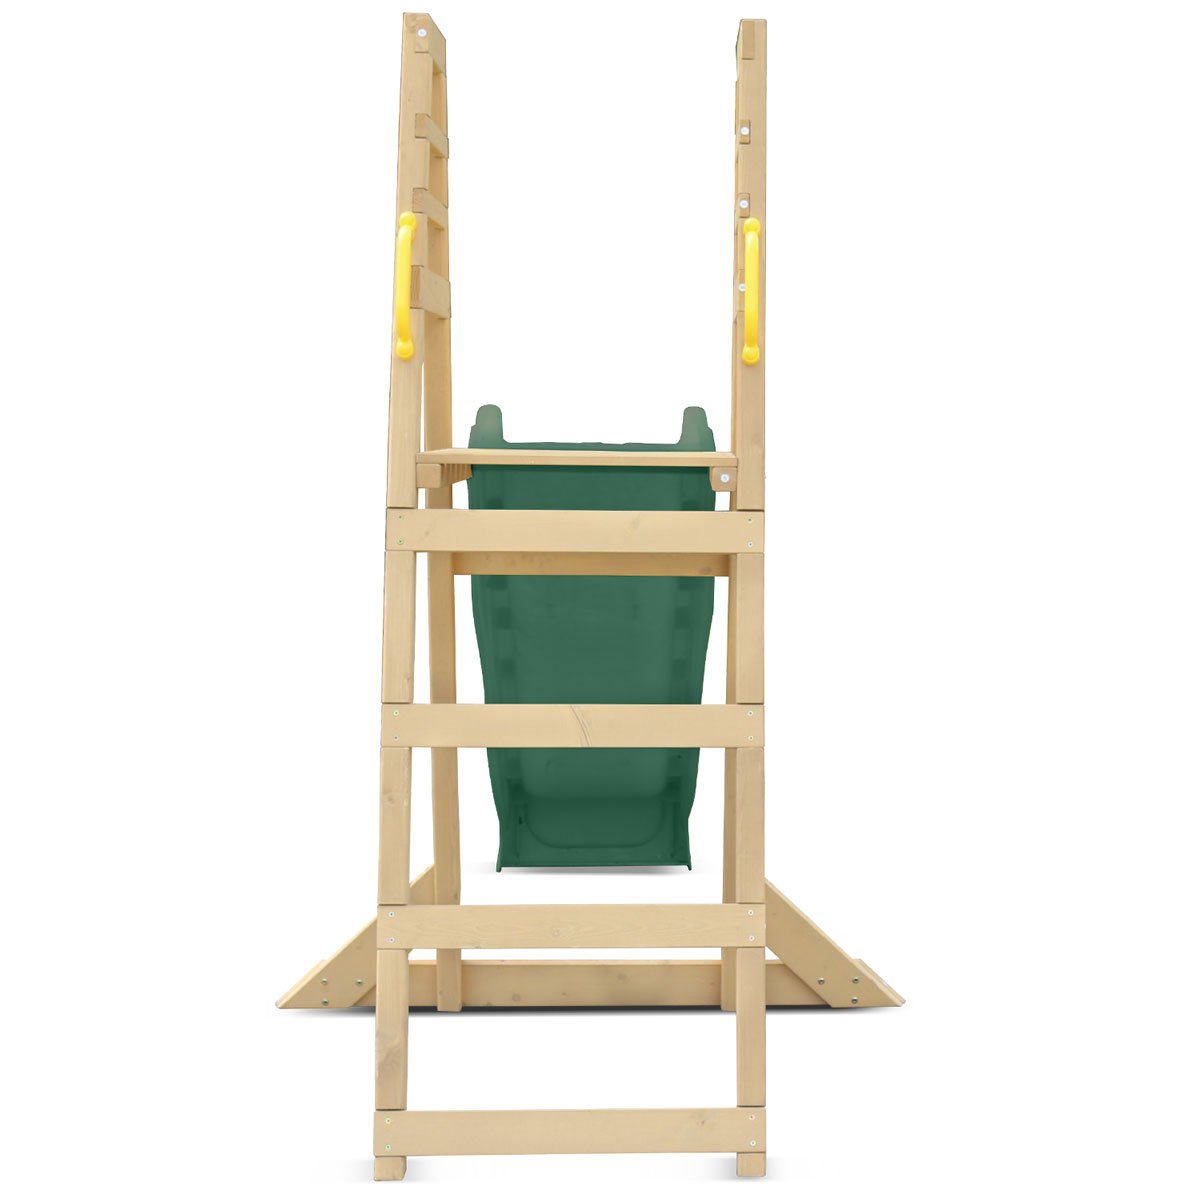 Shop Green sunshine slide with sturdy wooden ladder